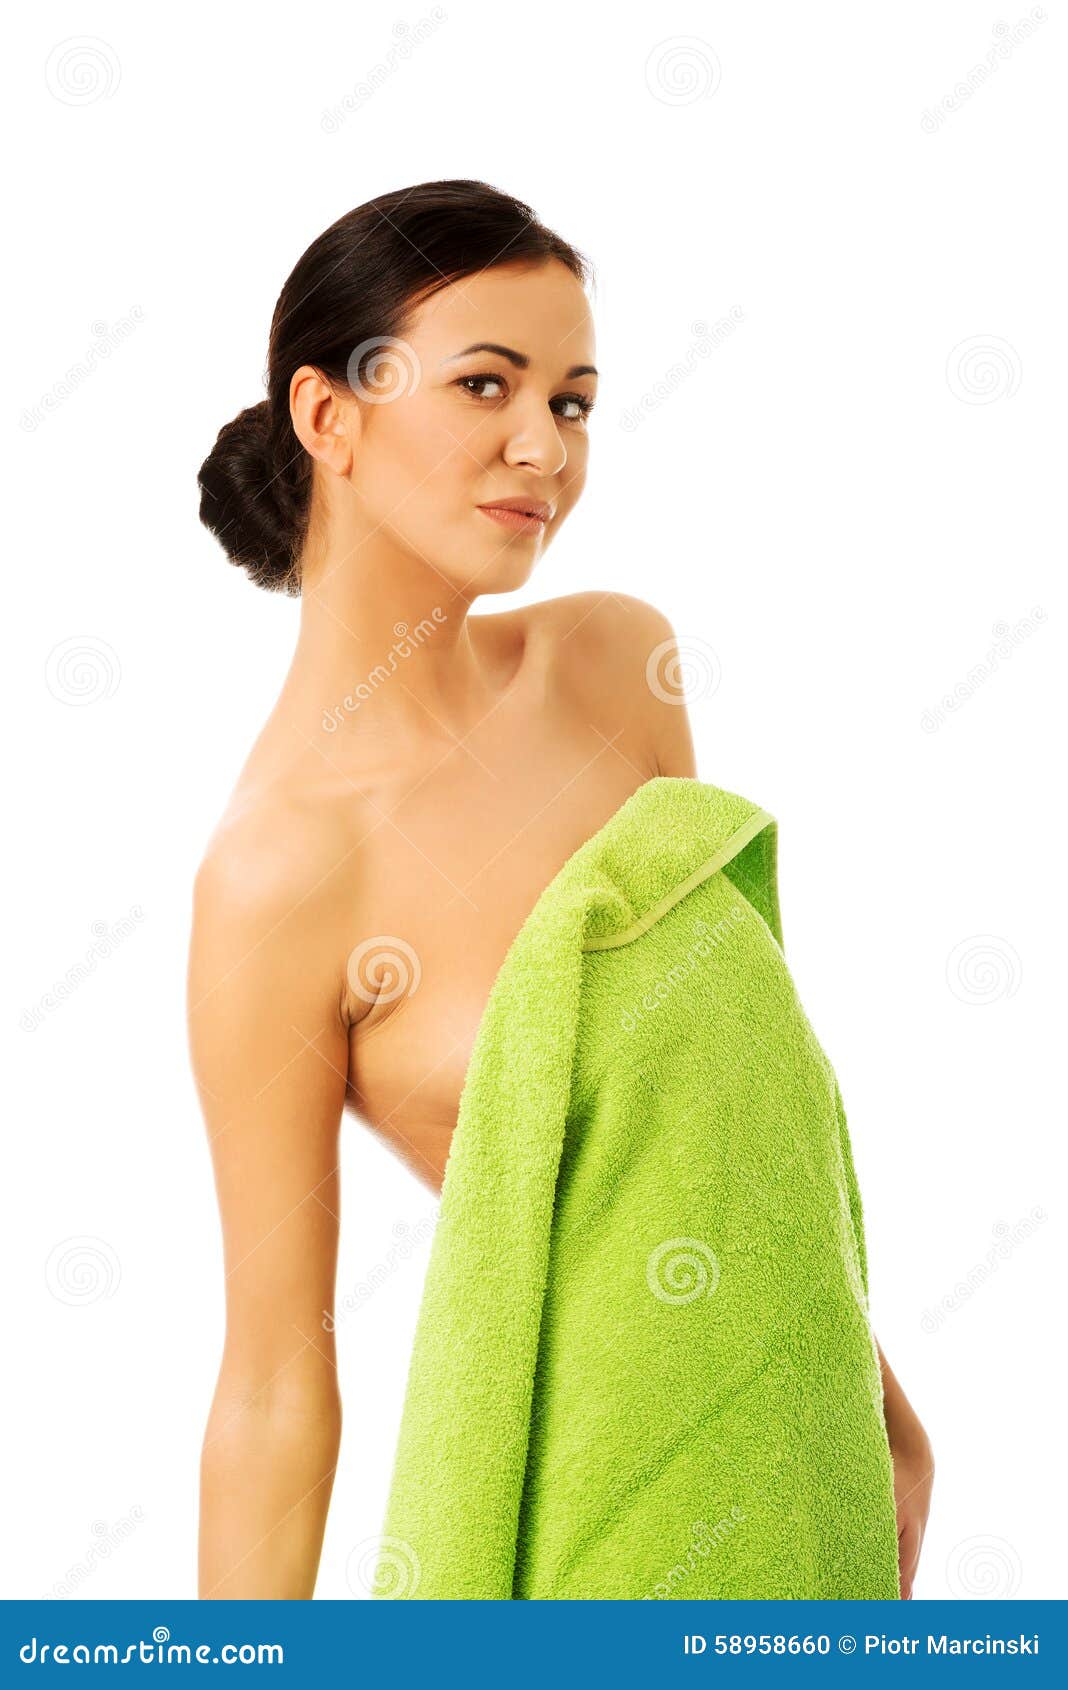 Обернутая полотенцем